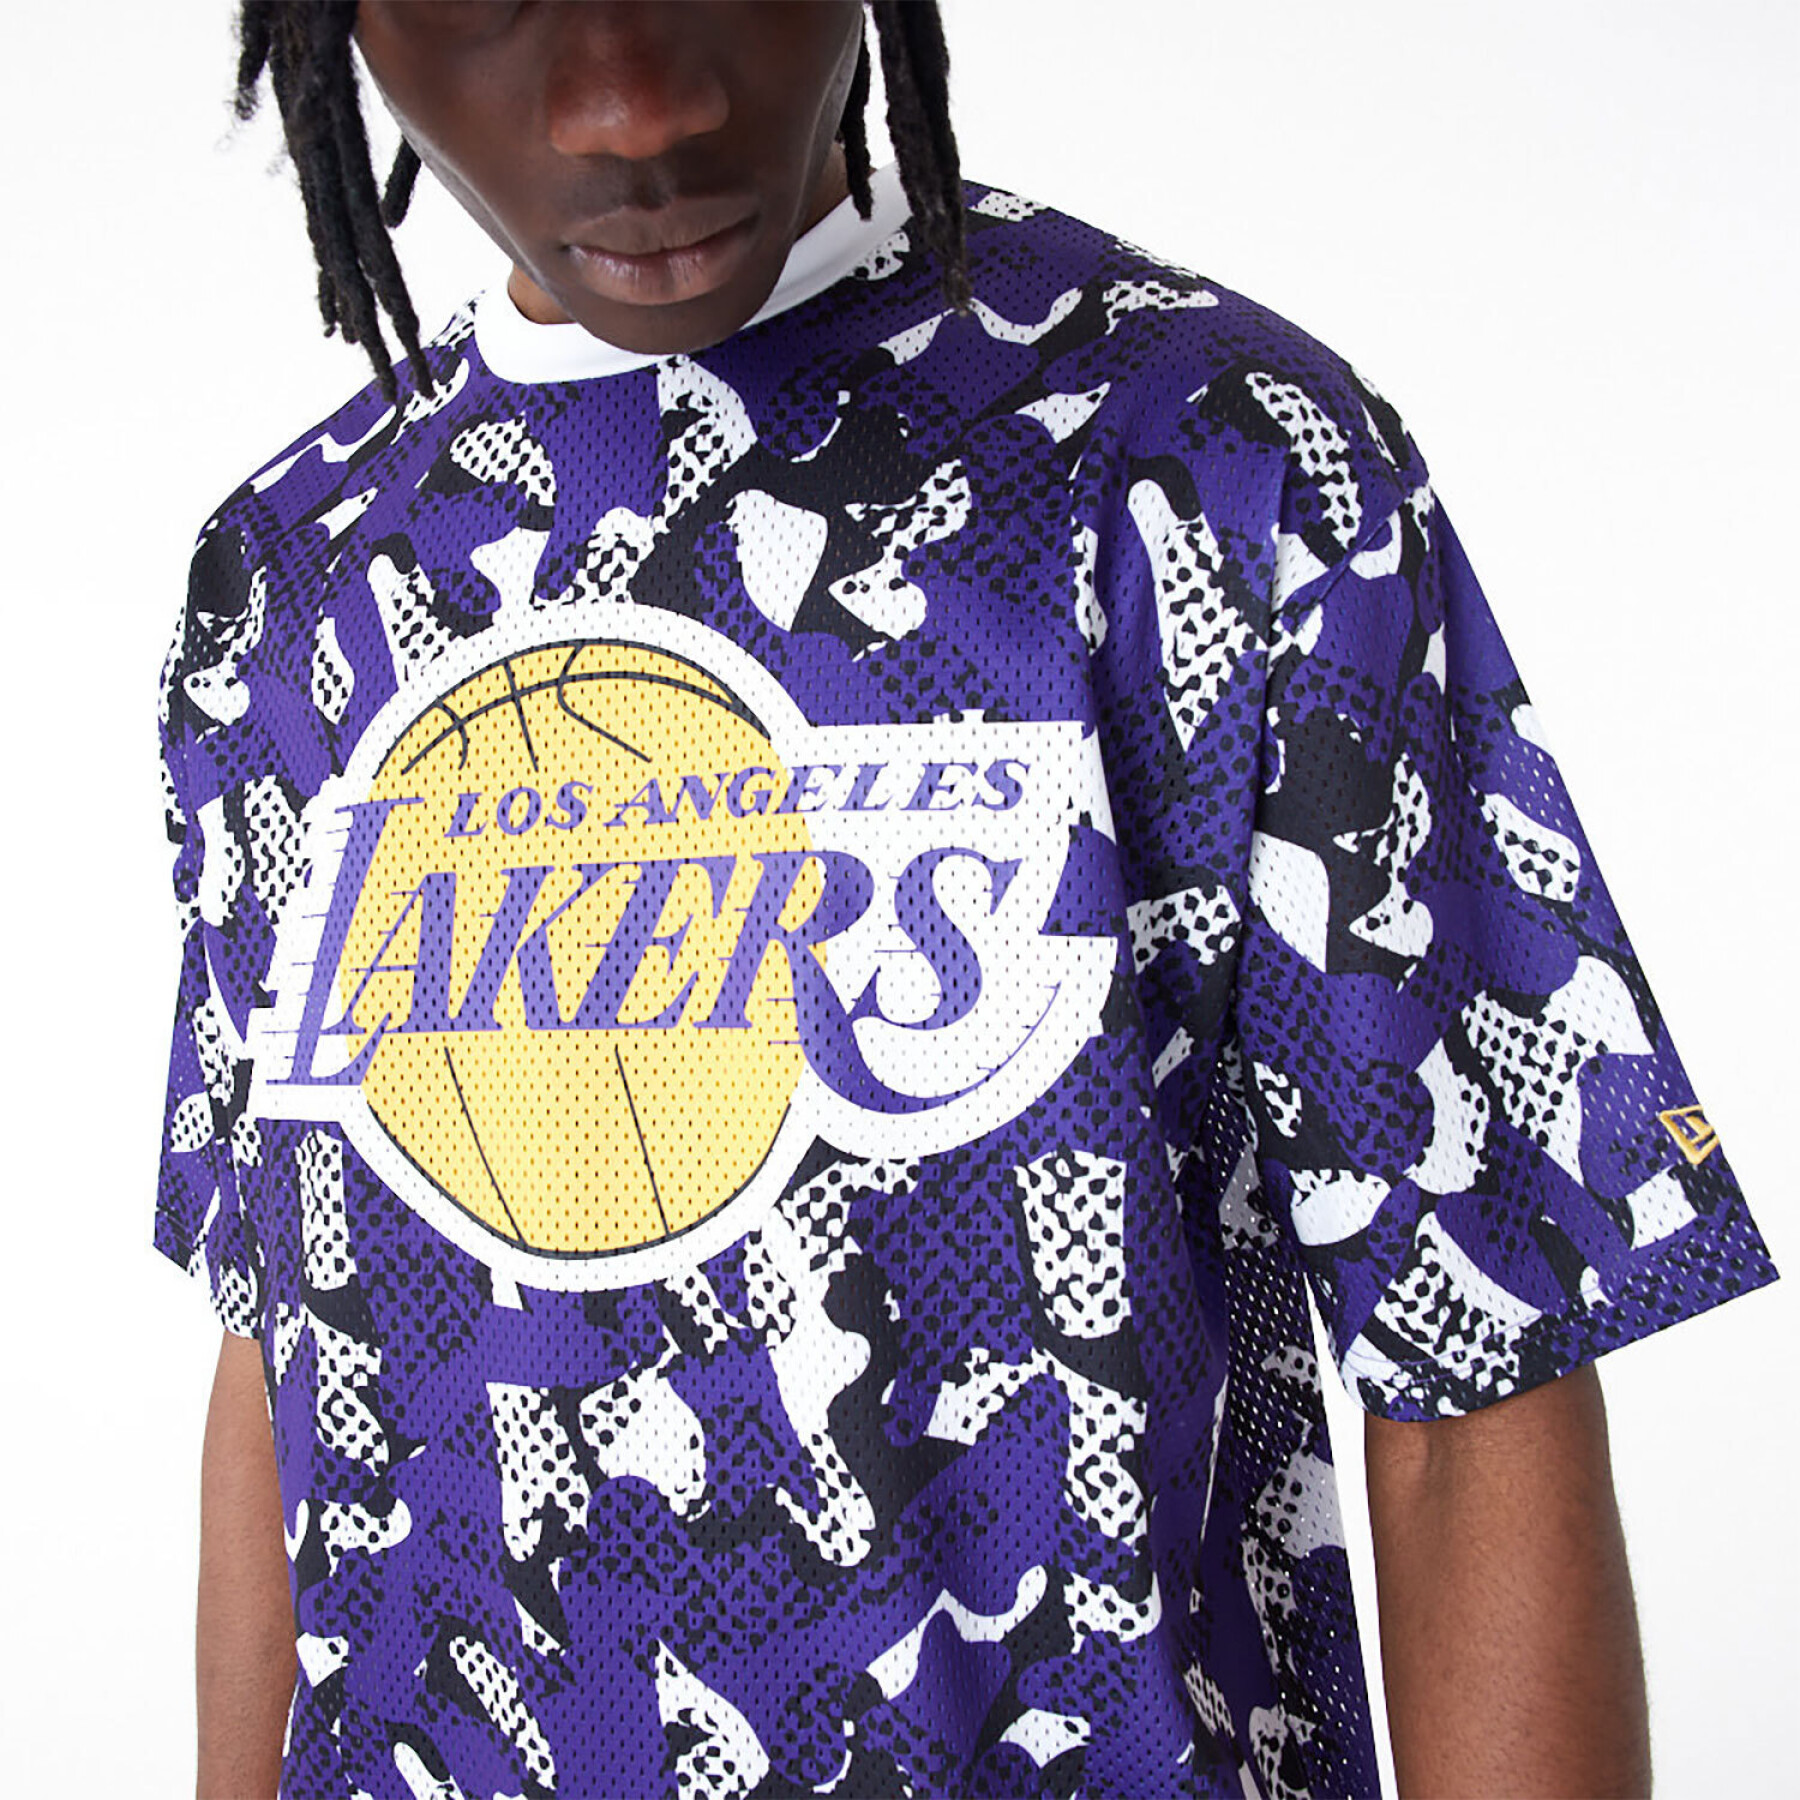 T-shirt Los Angeles Lakers NBA Team AOP